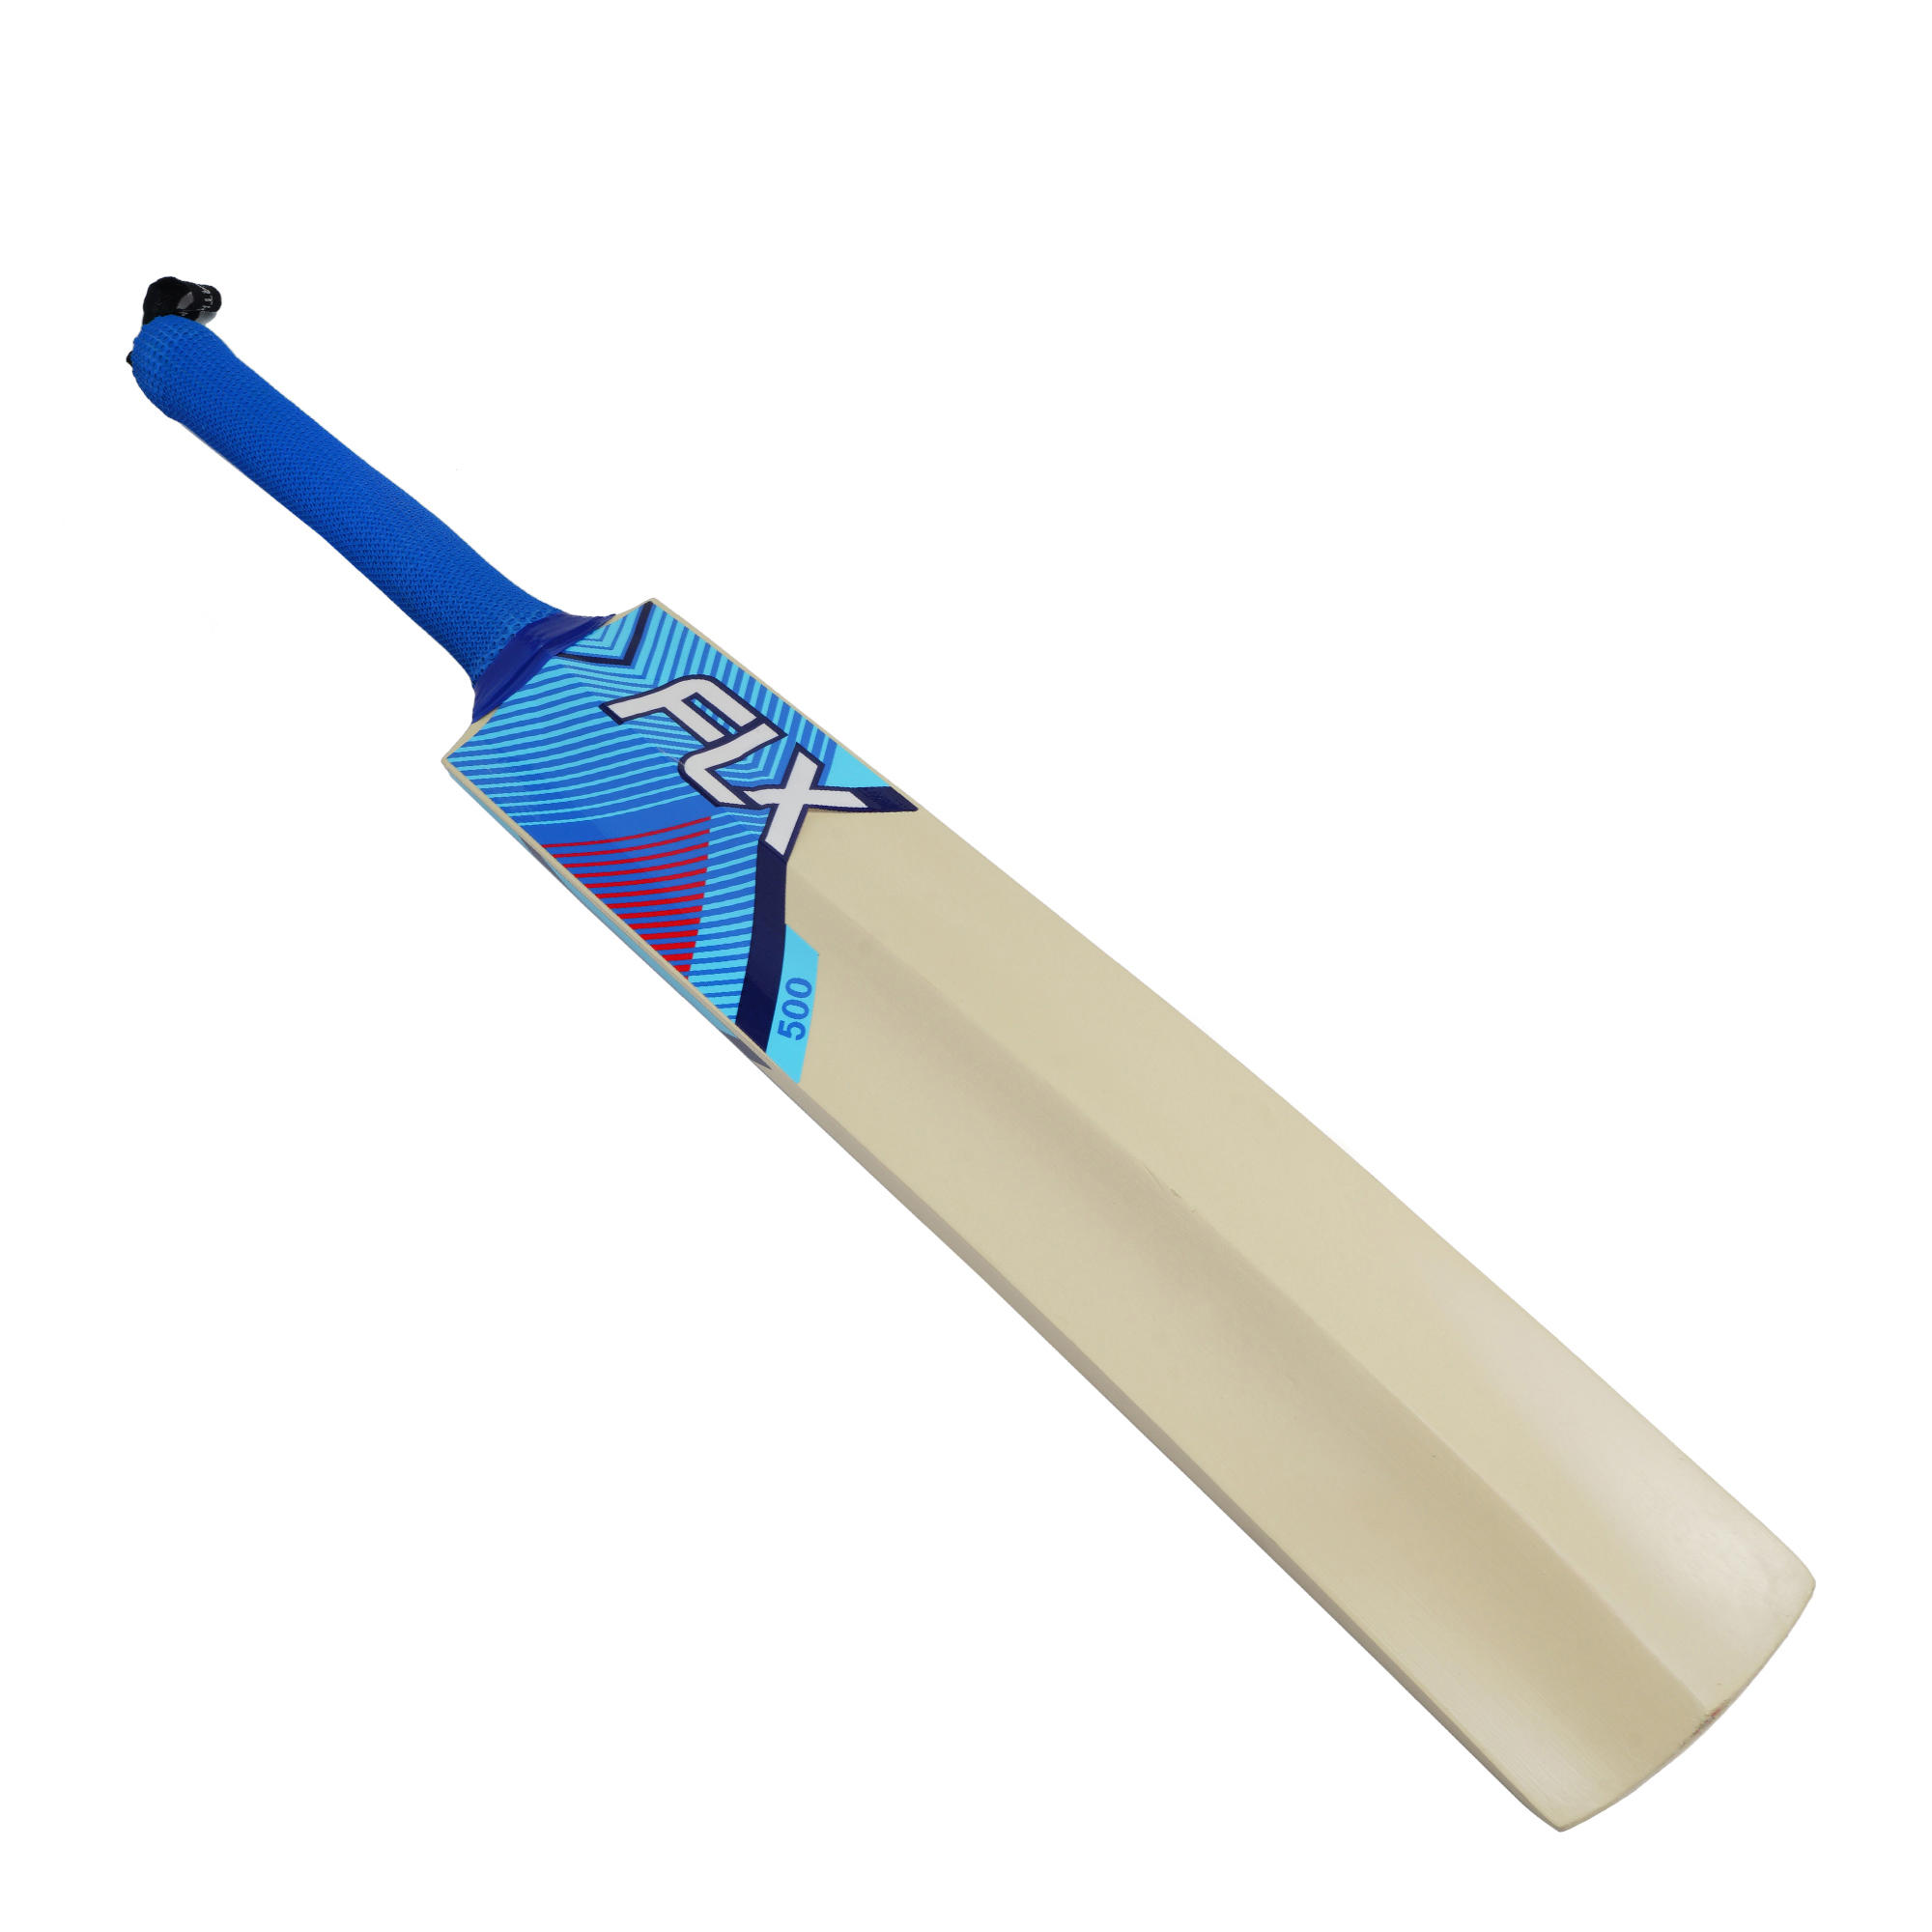 flx tennis cricket bat